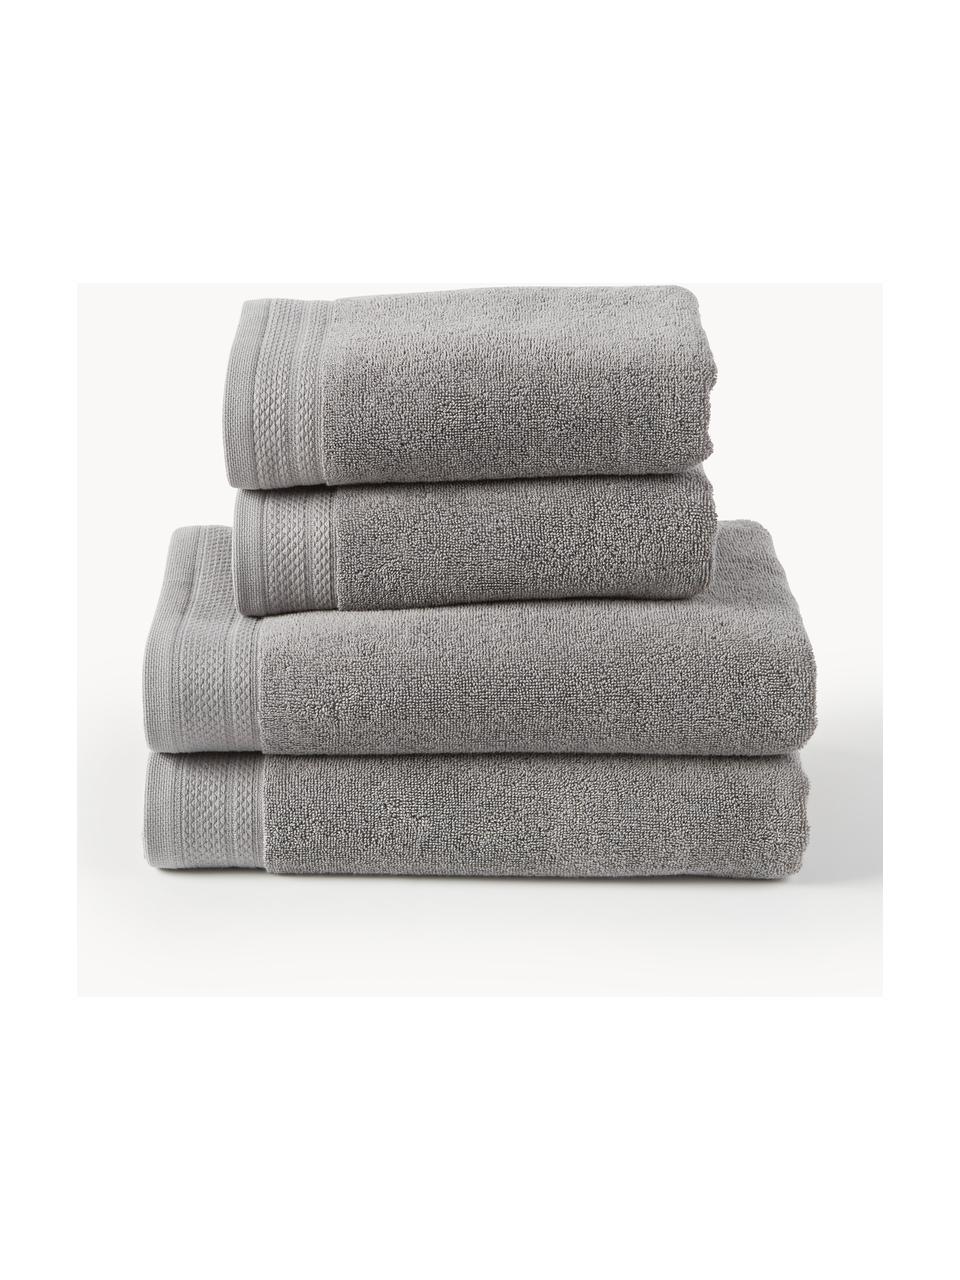 Set de toallas de algodón ecológico Premium, tamaños diferentes, 100% algodón ecológico con certificado GOTS (por GCL International, GCL-300517)
Gramaje superior 600 g/m², Gris oscuro, Set de 4 (toallas lavabo y toallas de ducha)